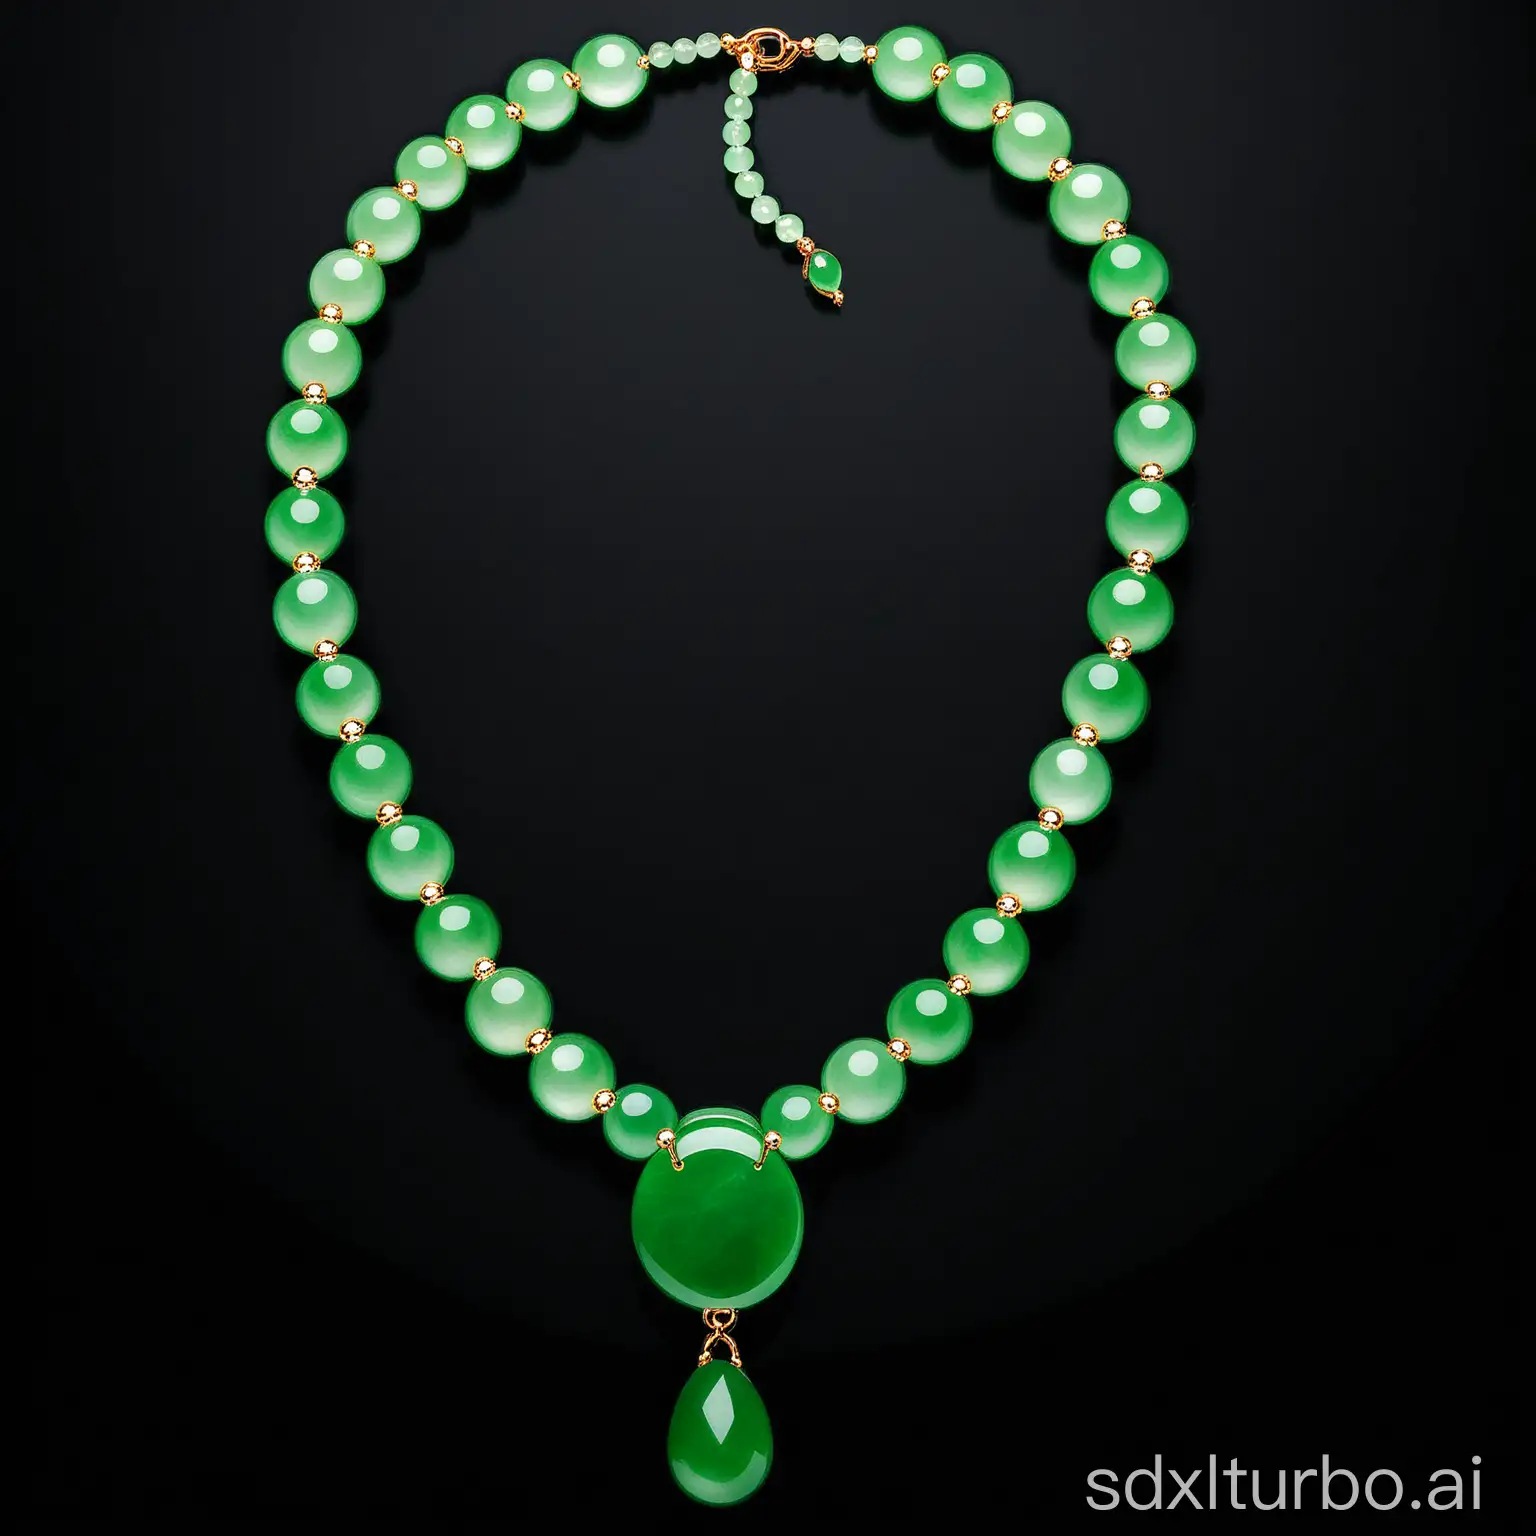 Elegant-Jade-Necklace-on-Black-Background-Exquisite-Jewelry-Photography